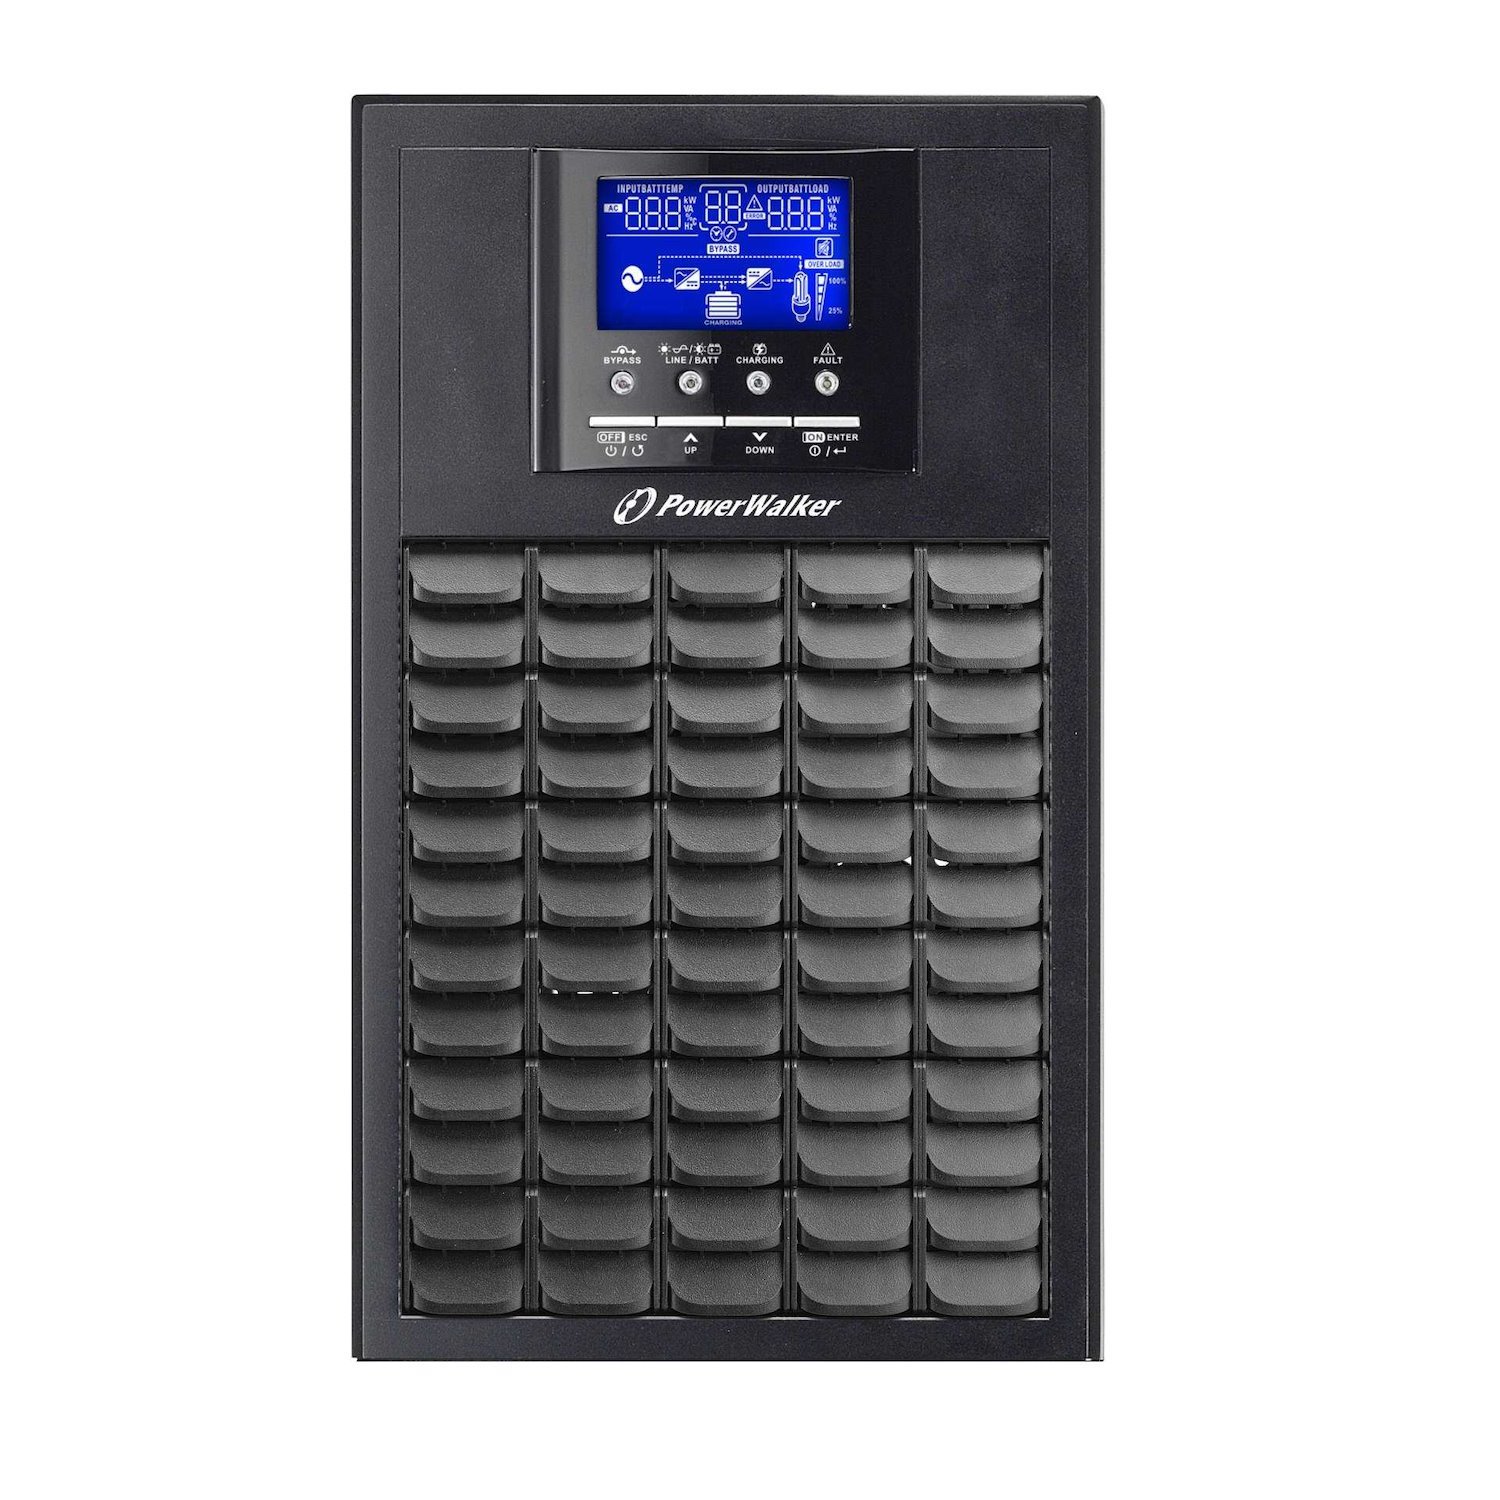 PowerWalker Vfi 5000 Evs Uninterruptible Power Supply [Ups] Double-Conversion [Online] 5 Kva 5000 W (Vfi 5000 Evs - Warranty: 24M)